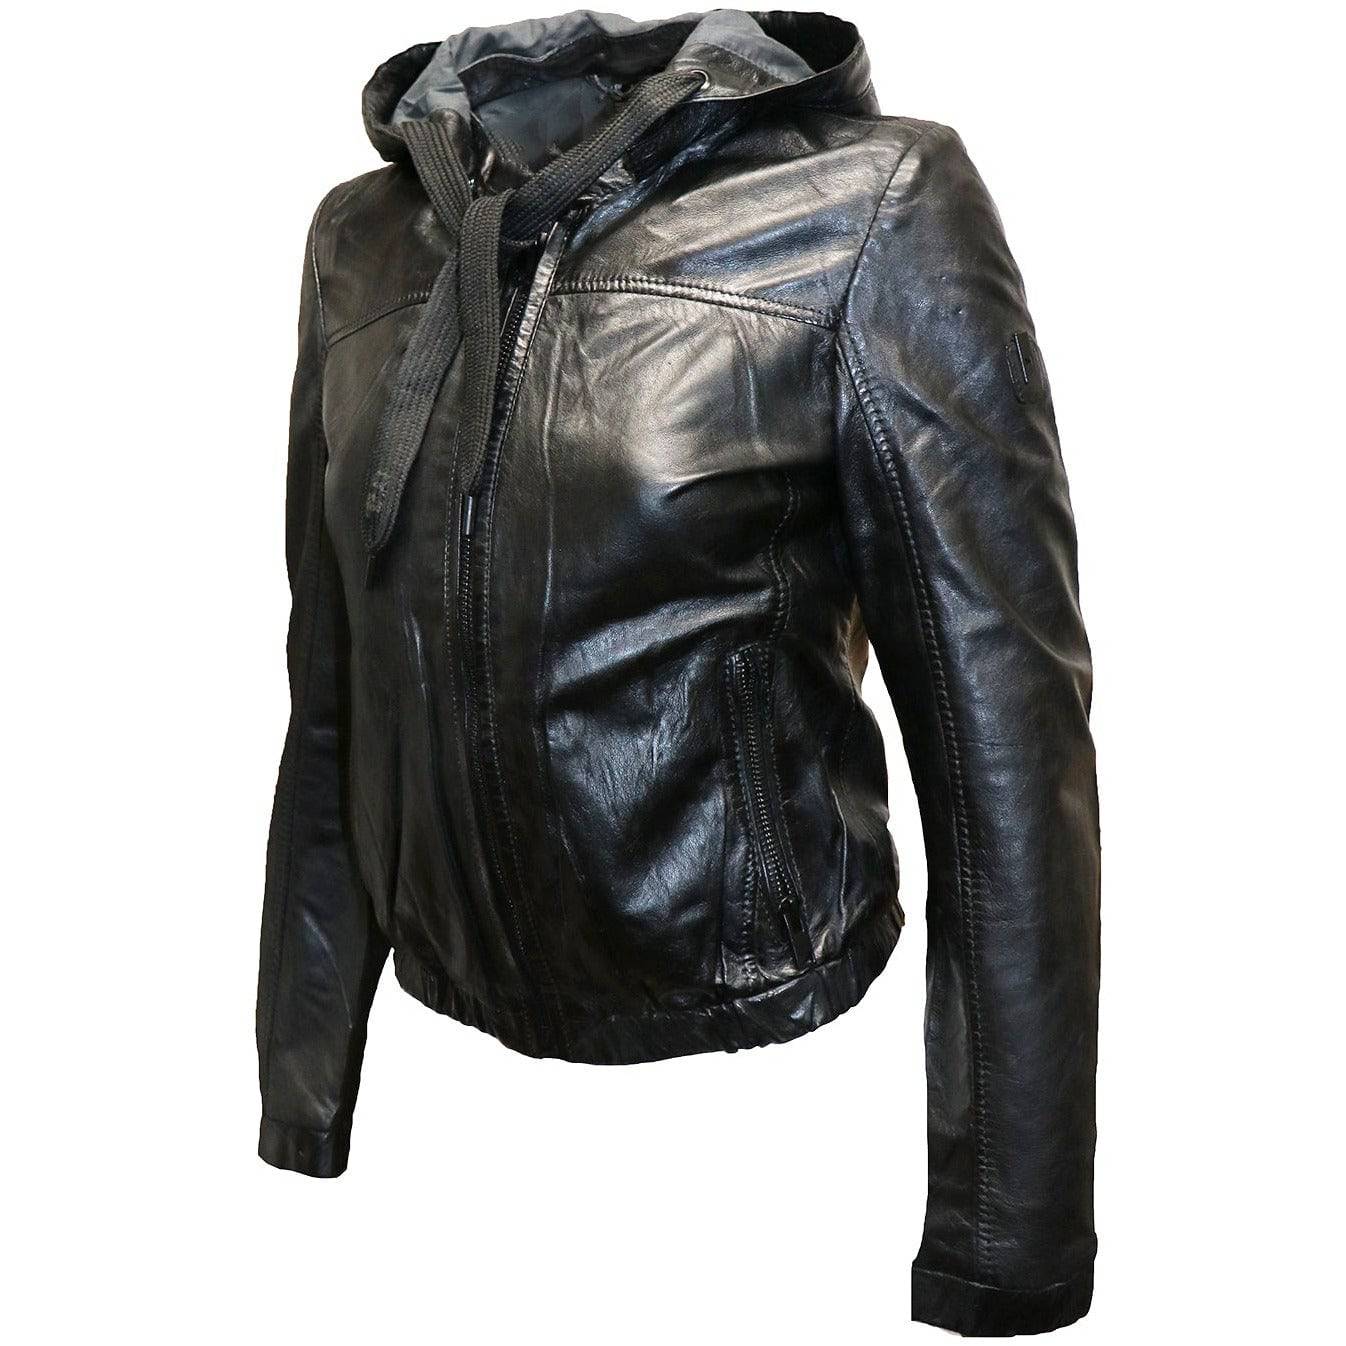 Mauritius Women's Leather Bomber Jacket with Hood - Zooloo Leather